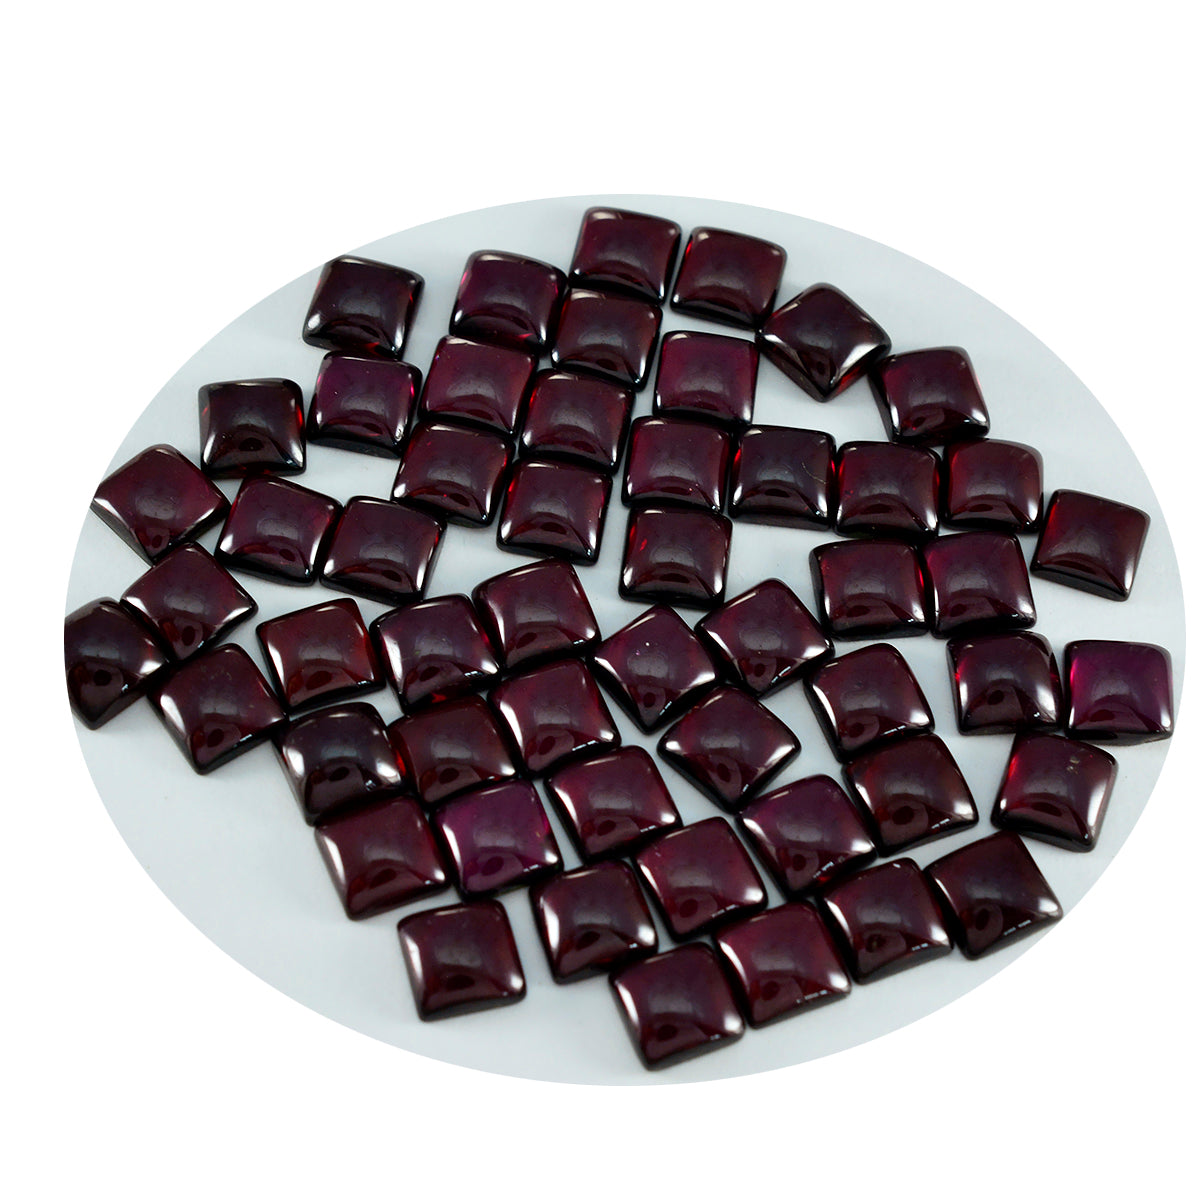 Riyogems 1PC Red Garnet Cabochon 7x7 mm Square Shape excellent Quality Loose Stone